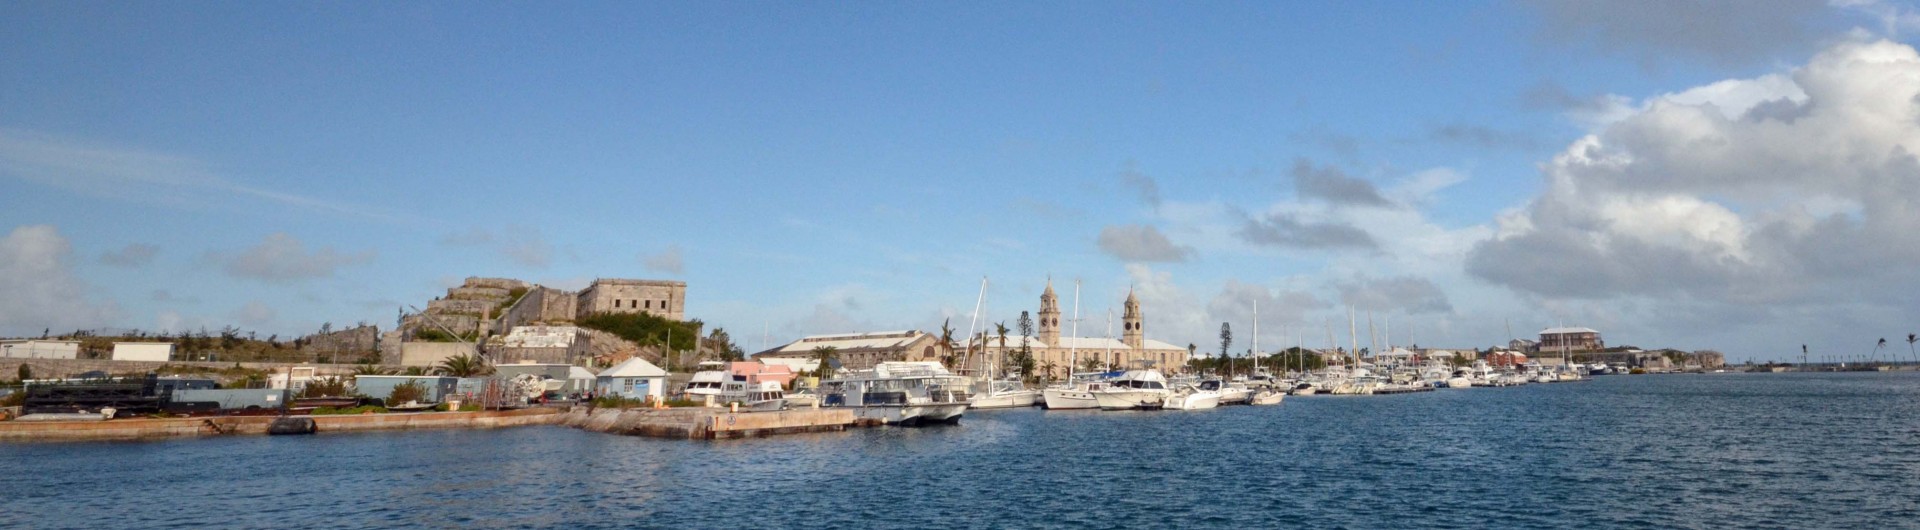 Photo of Royal Naval Dockyard